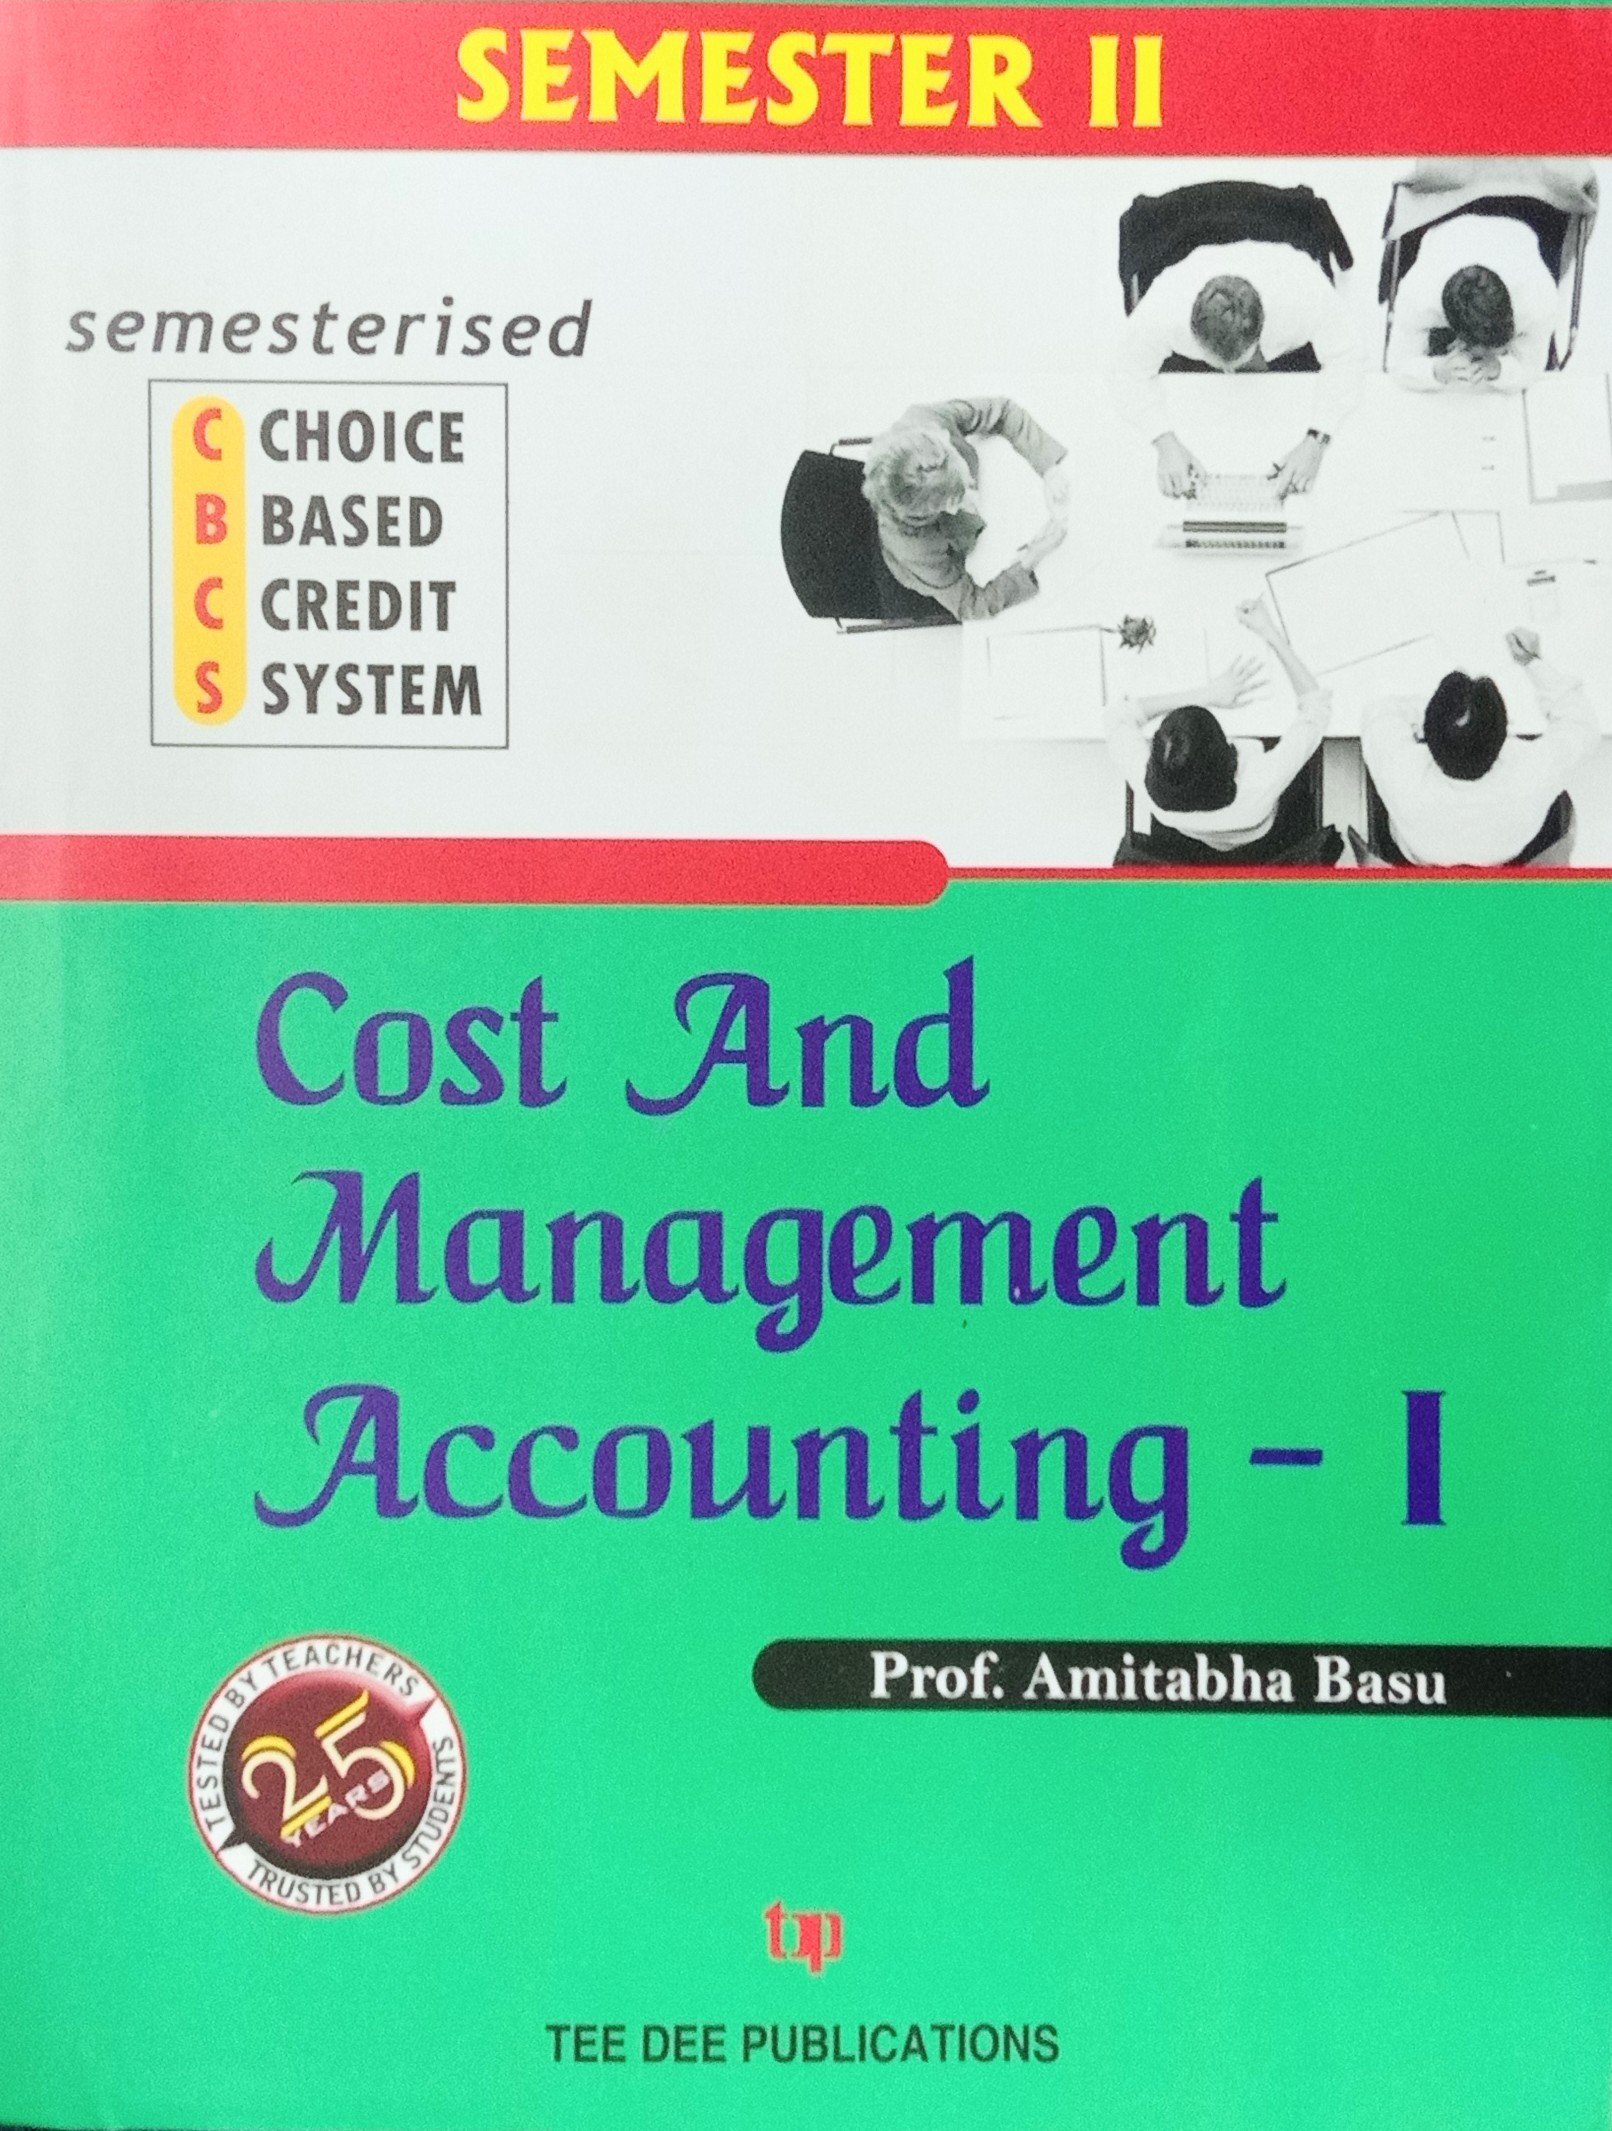 Cost And Management Accounting I By Amitabha Basu 2nd Semester B com